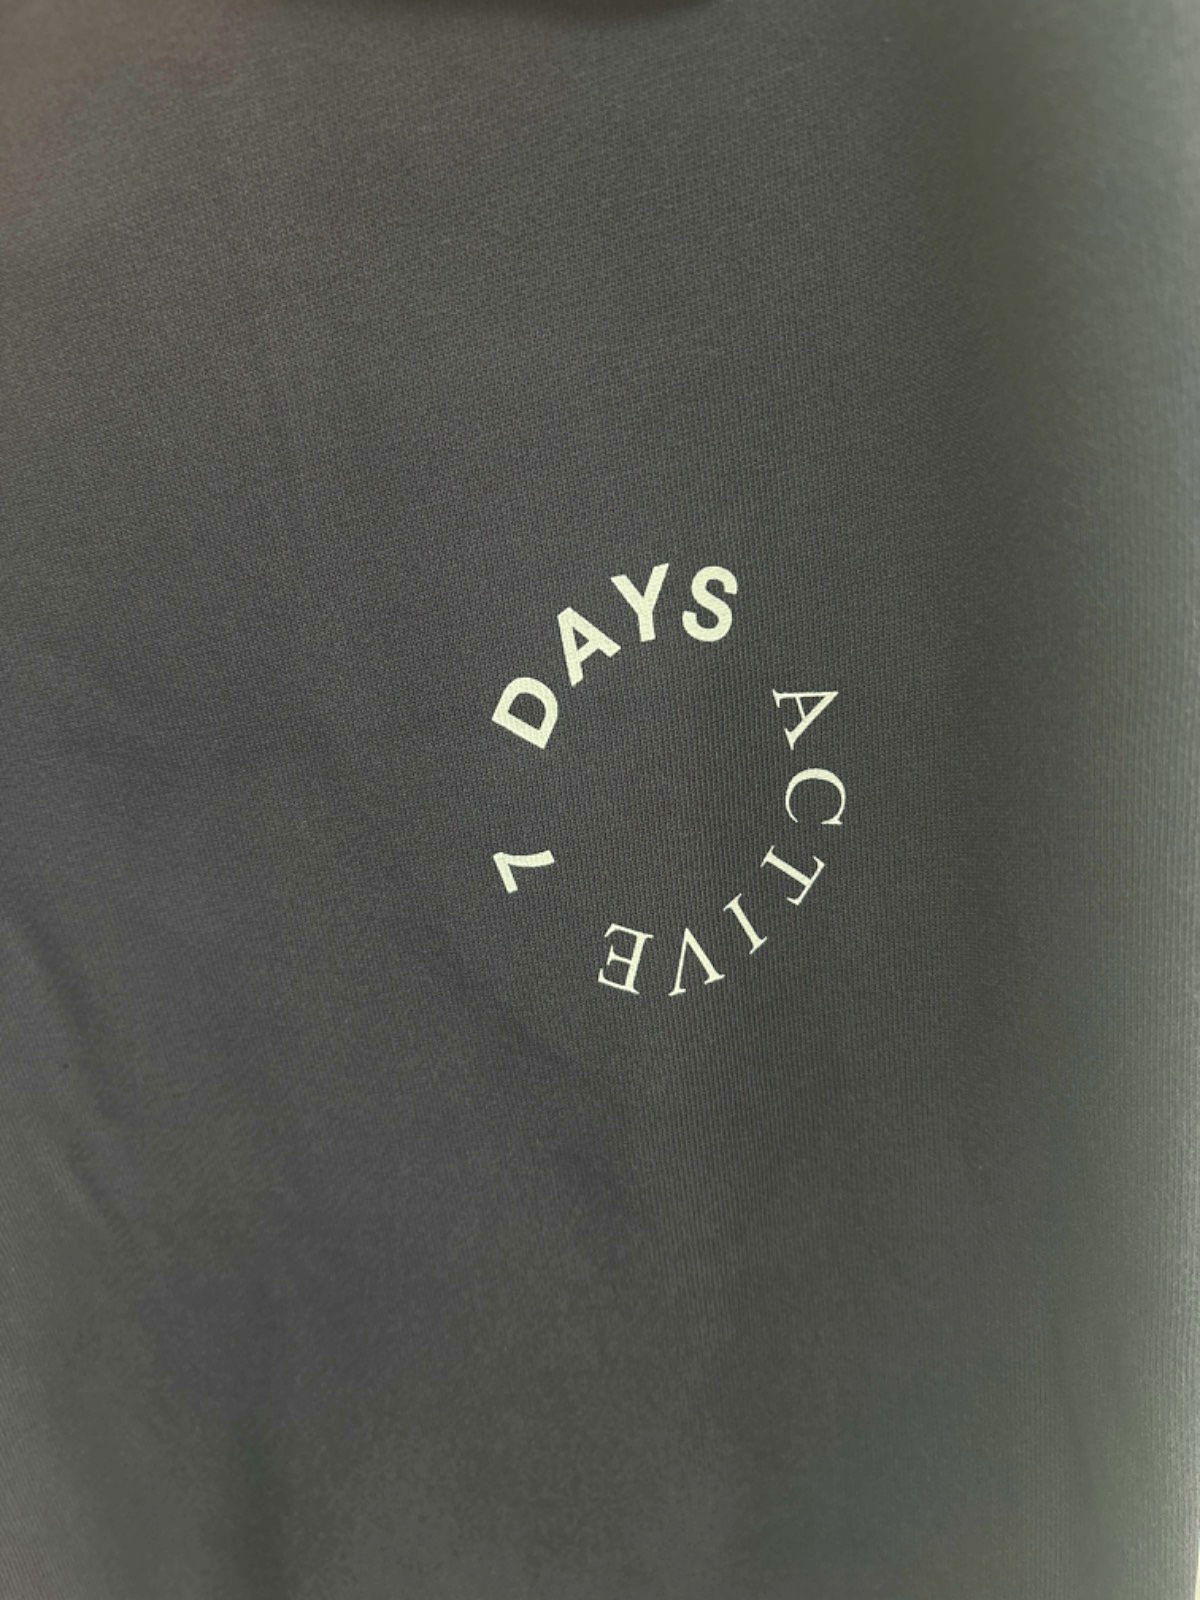 7 DAYS ACTIVE Dark Grey Mondays Pants Size S